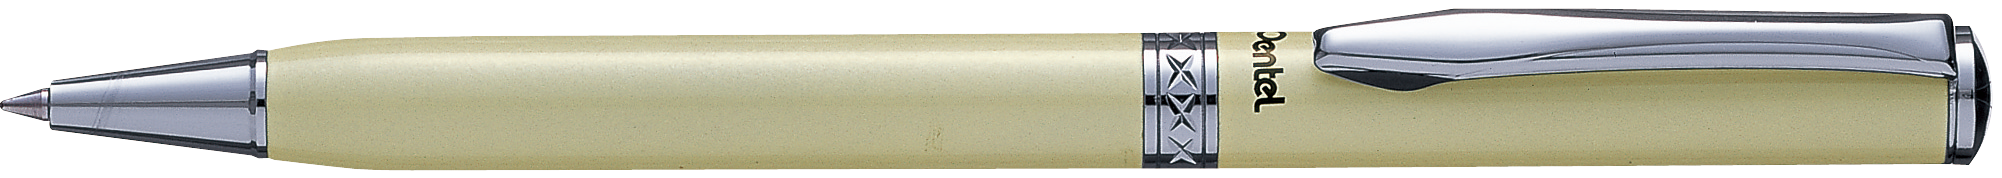 Bút Ký Cao Cấp Pentel B811W 0.8mm Vỏ Sữa